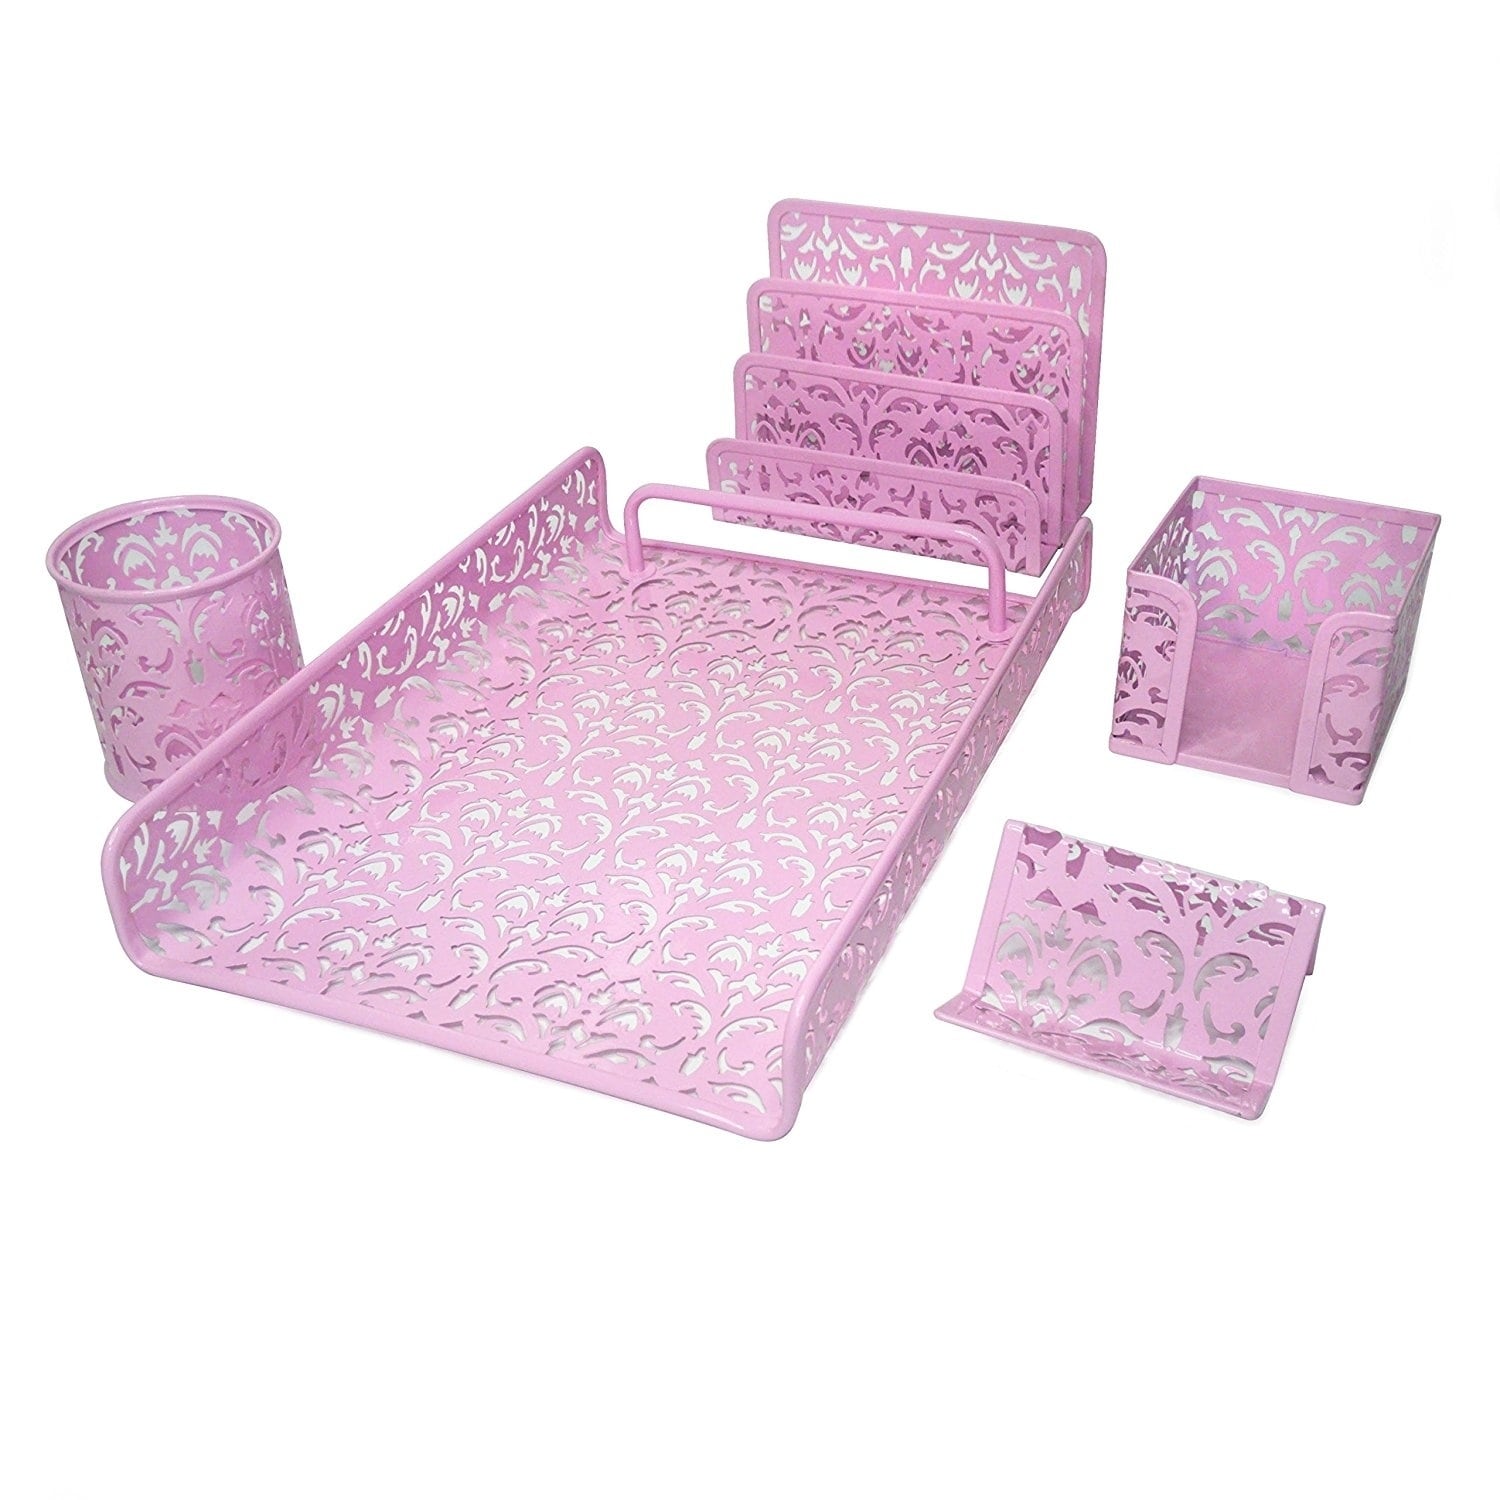 Shop Majestic Goods 5 Piece Pink Flower Design Punched Metal Mesh